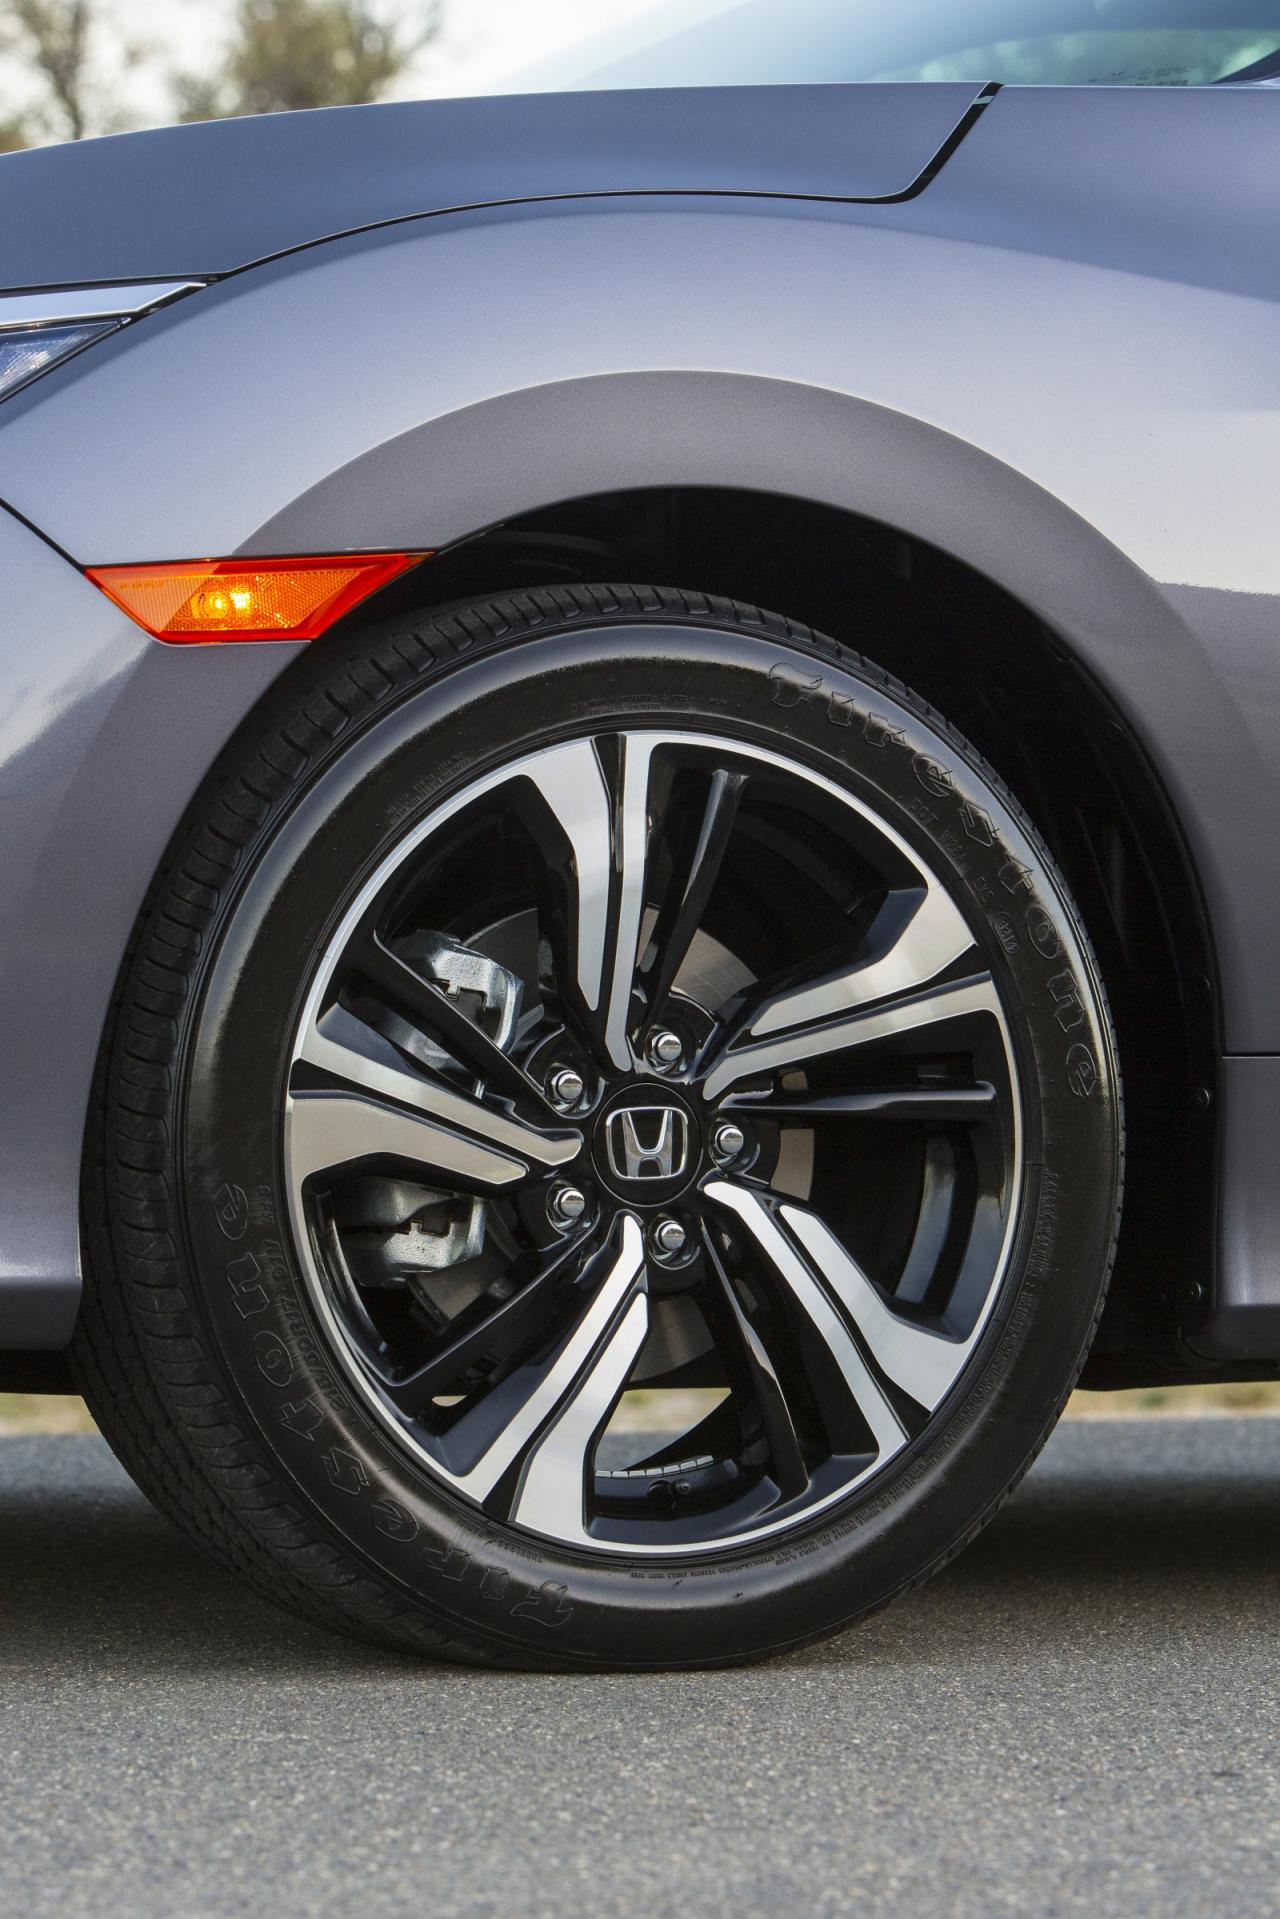 2016 Honda CIvic grey alloy wheel